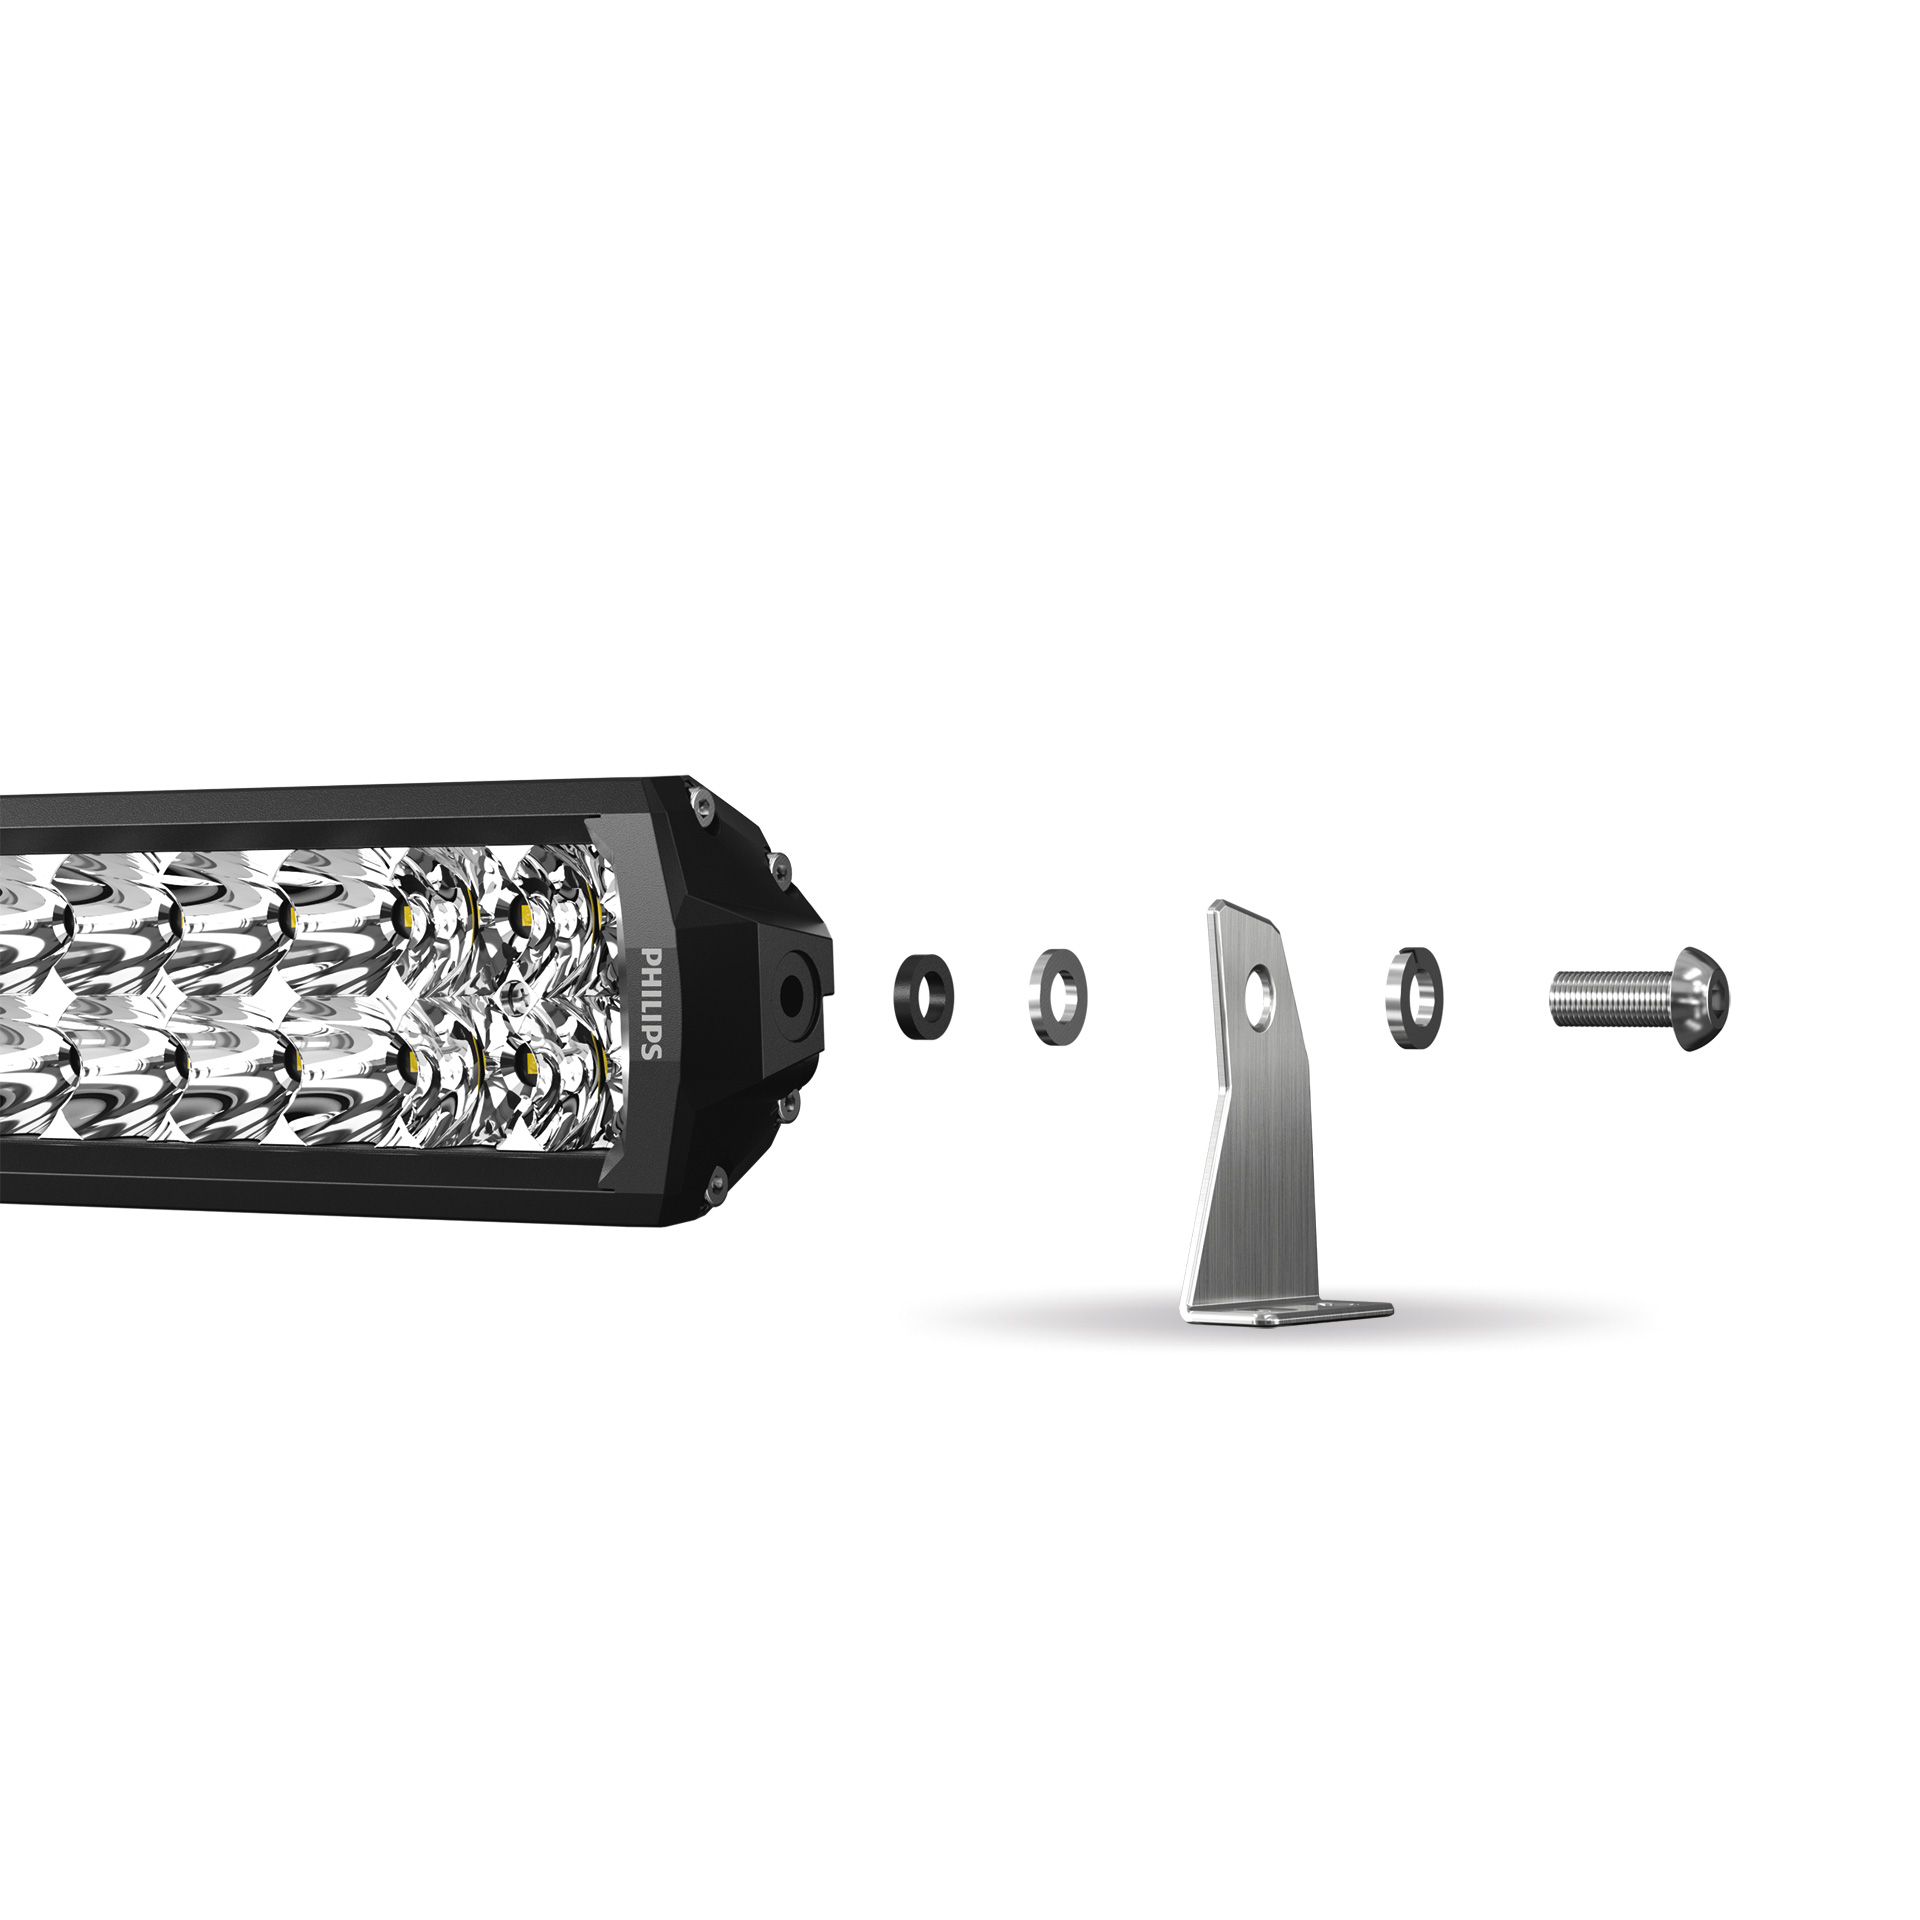 Philips Ultinon Drive 5050L 10 Inch LED Lichtbalk Boost (1510740)